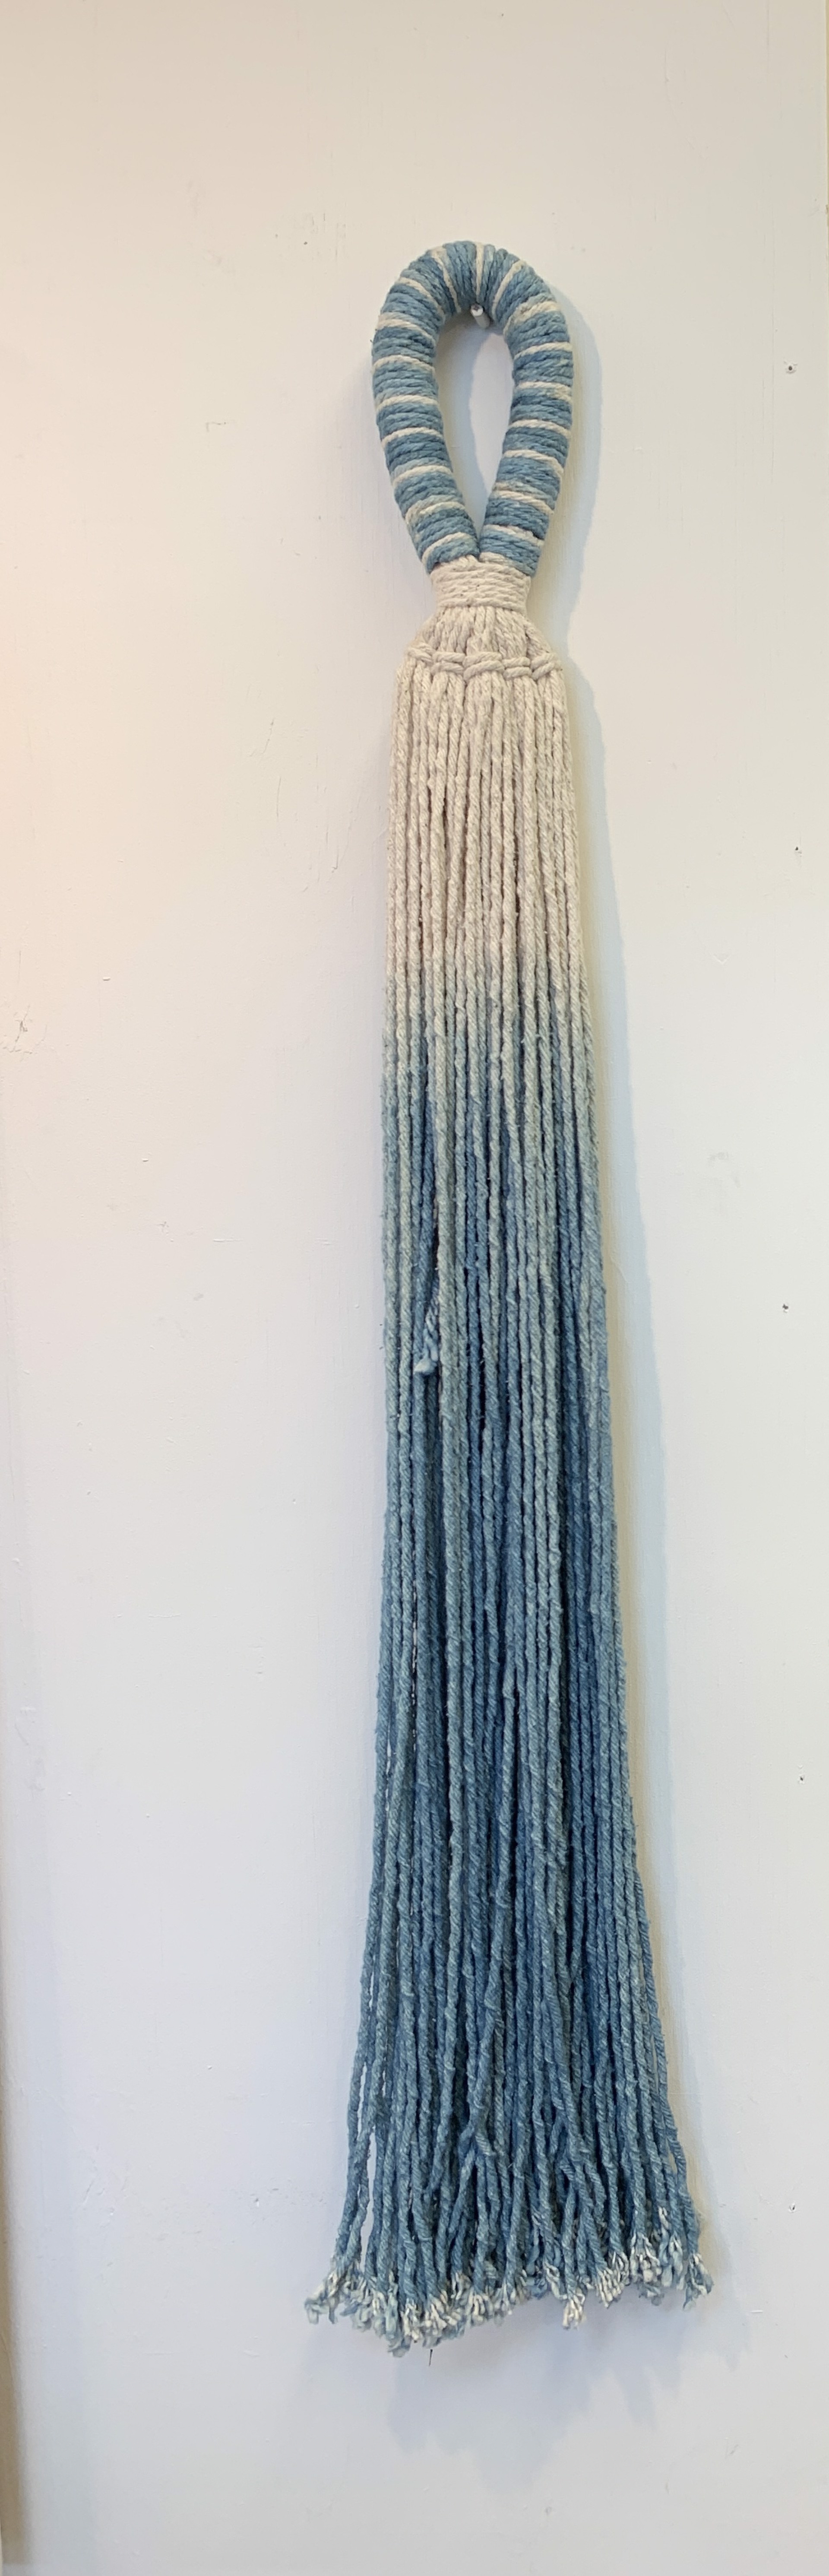 Rope Sculpture 2 by Liz Robb